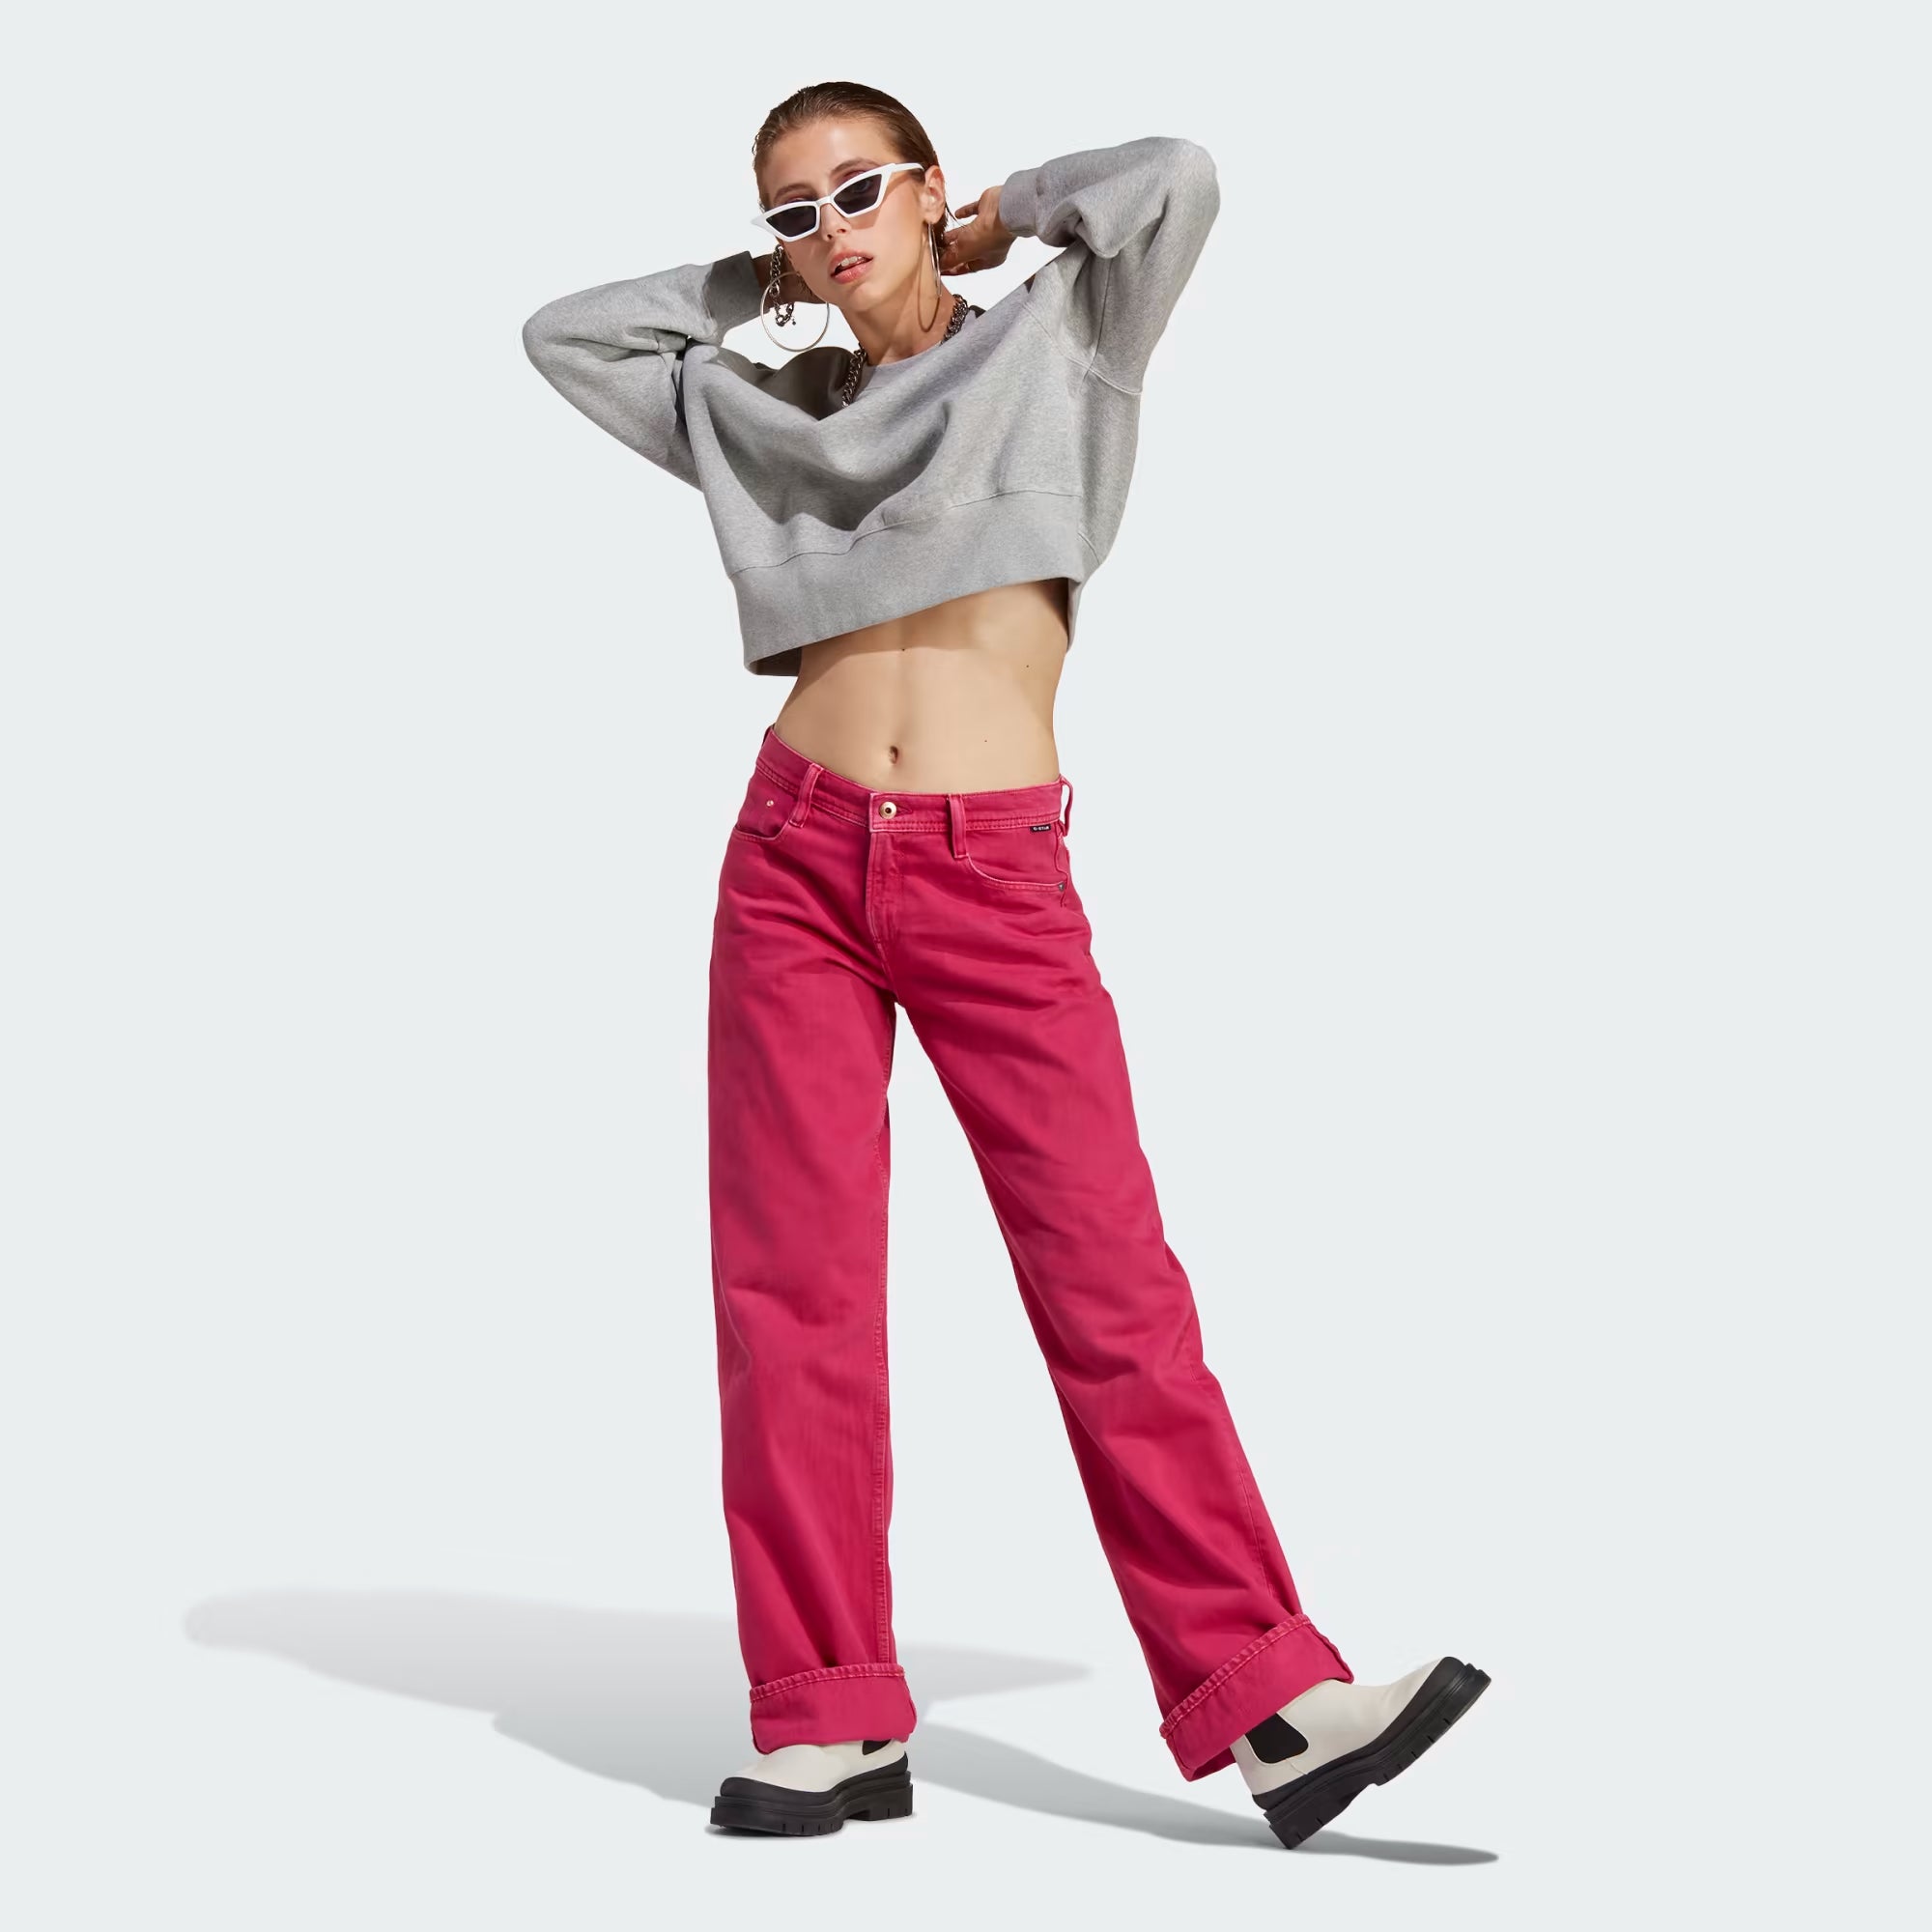 Adidas Adicolor Essentials Crew Sweatshirt - Women